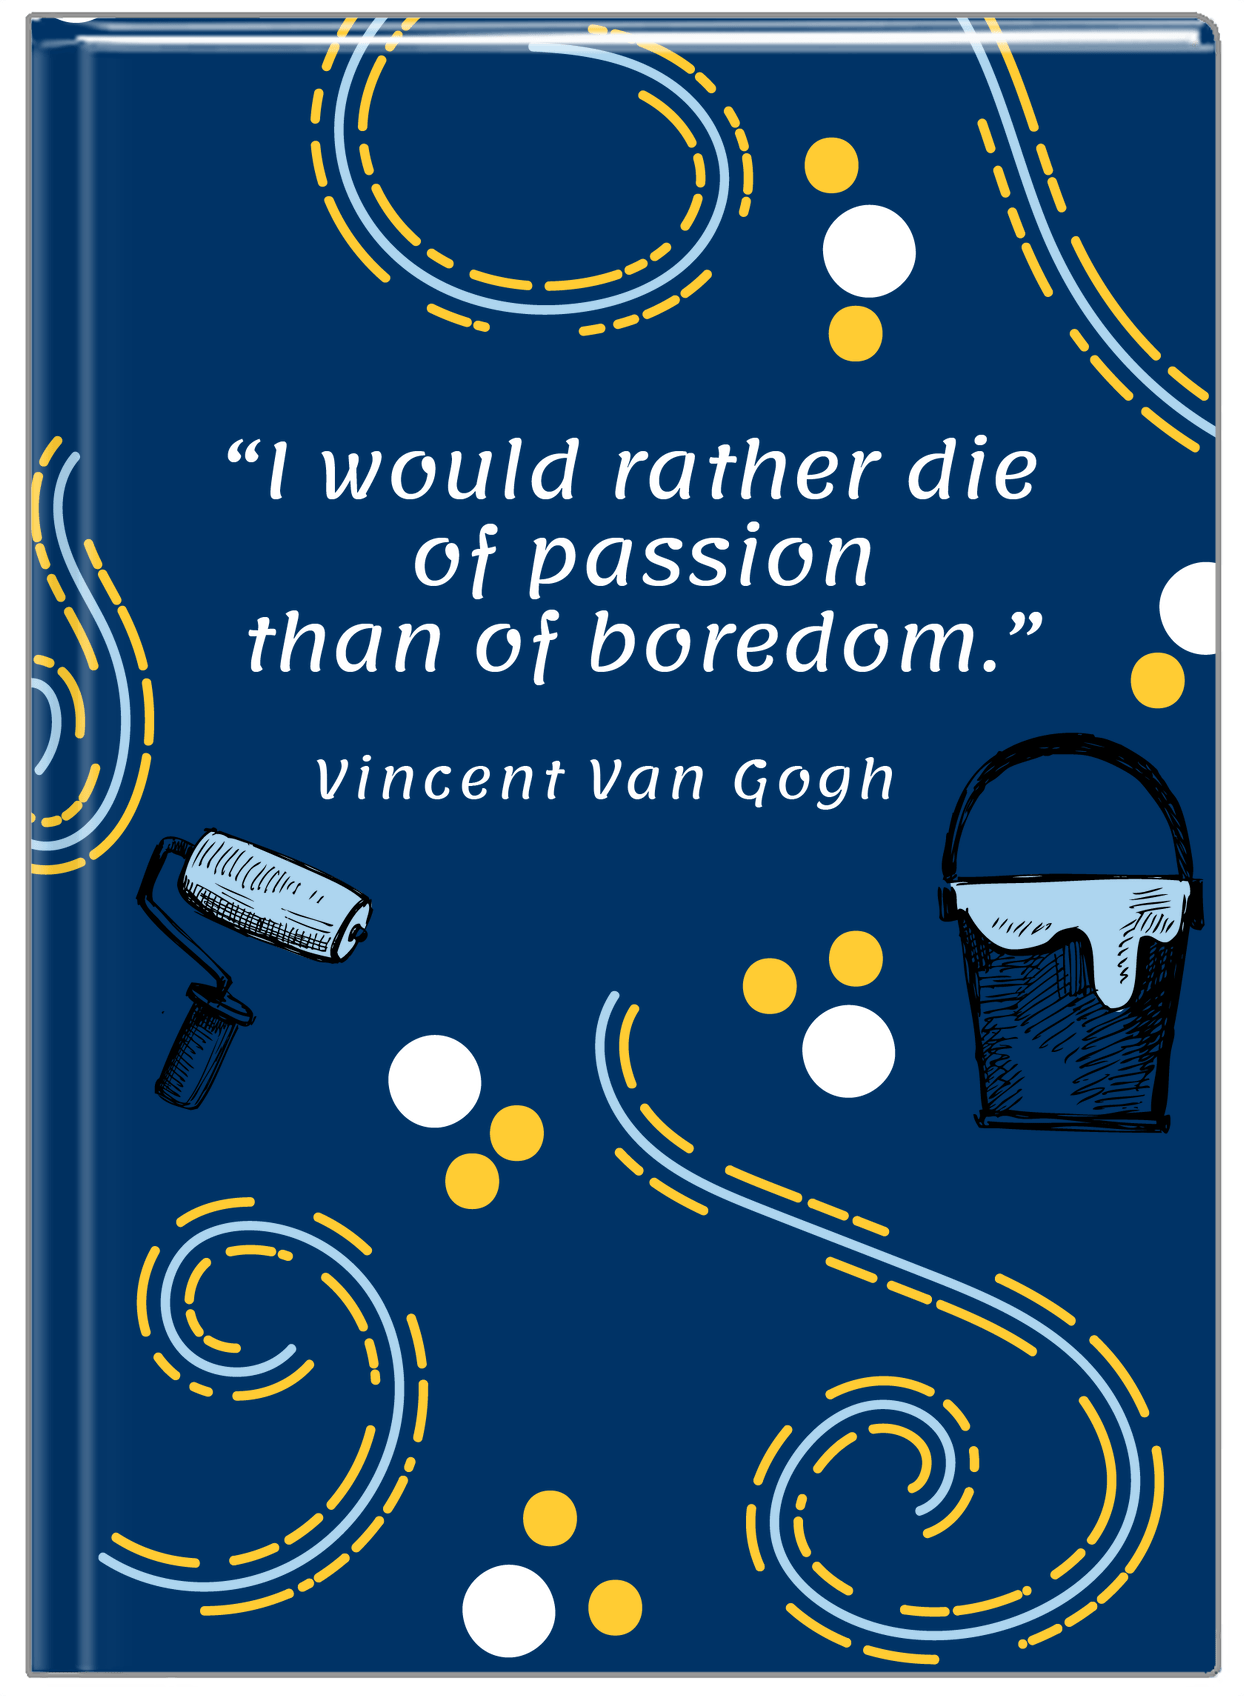 Personalized Famous Quotes Journal - Vincent Van Gogh - Front View